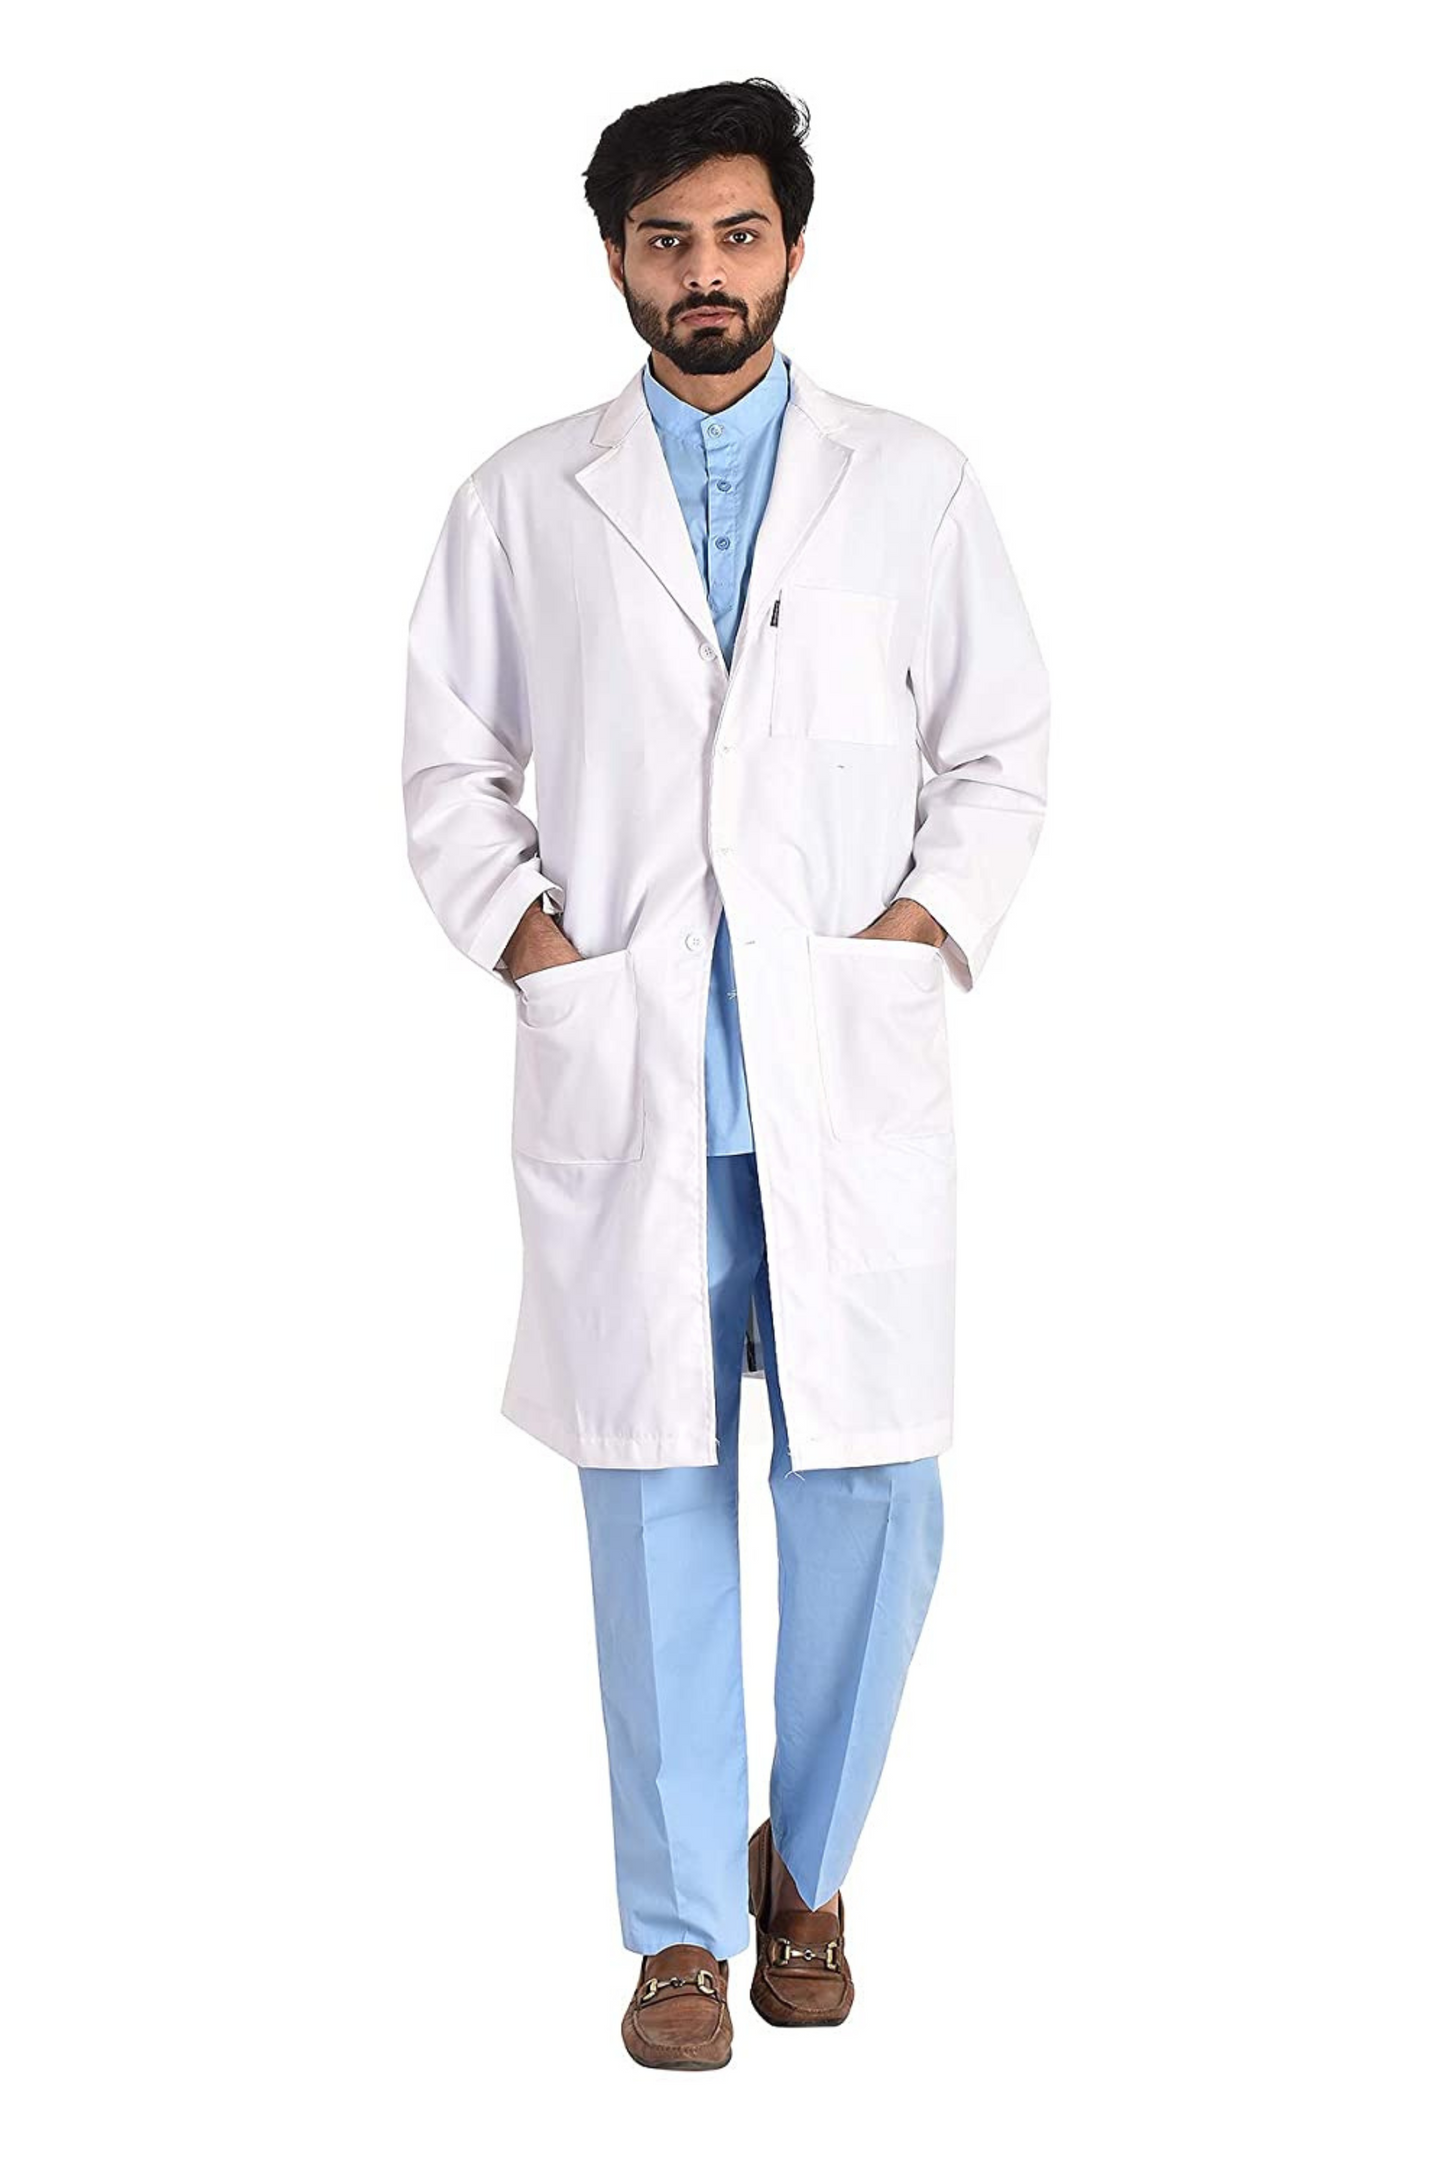 Cotton Unisex Apron Lab Coat - Knee Length - Full Sleeves - White